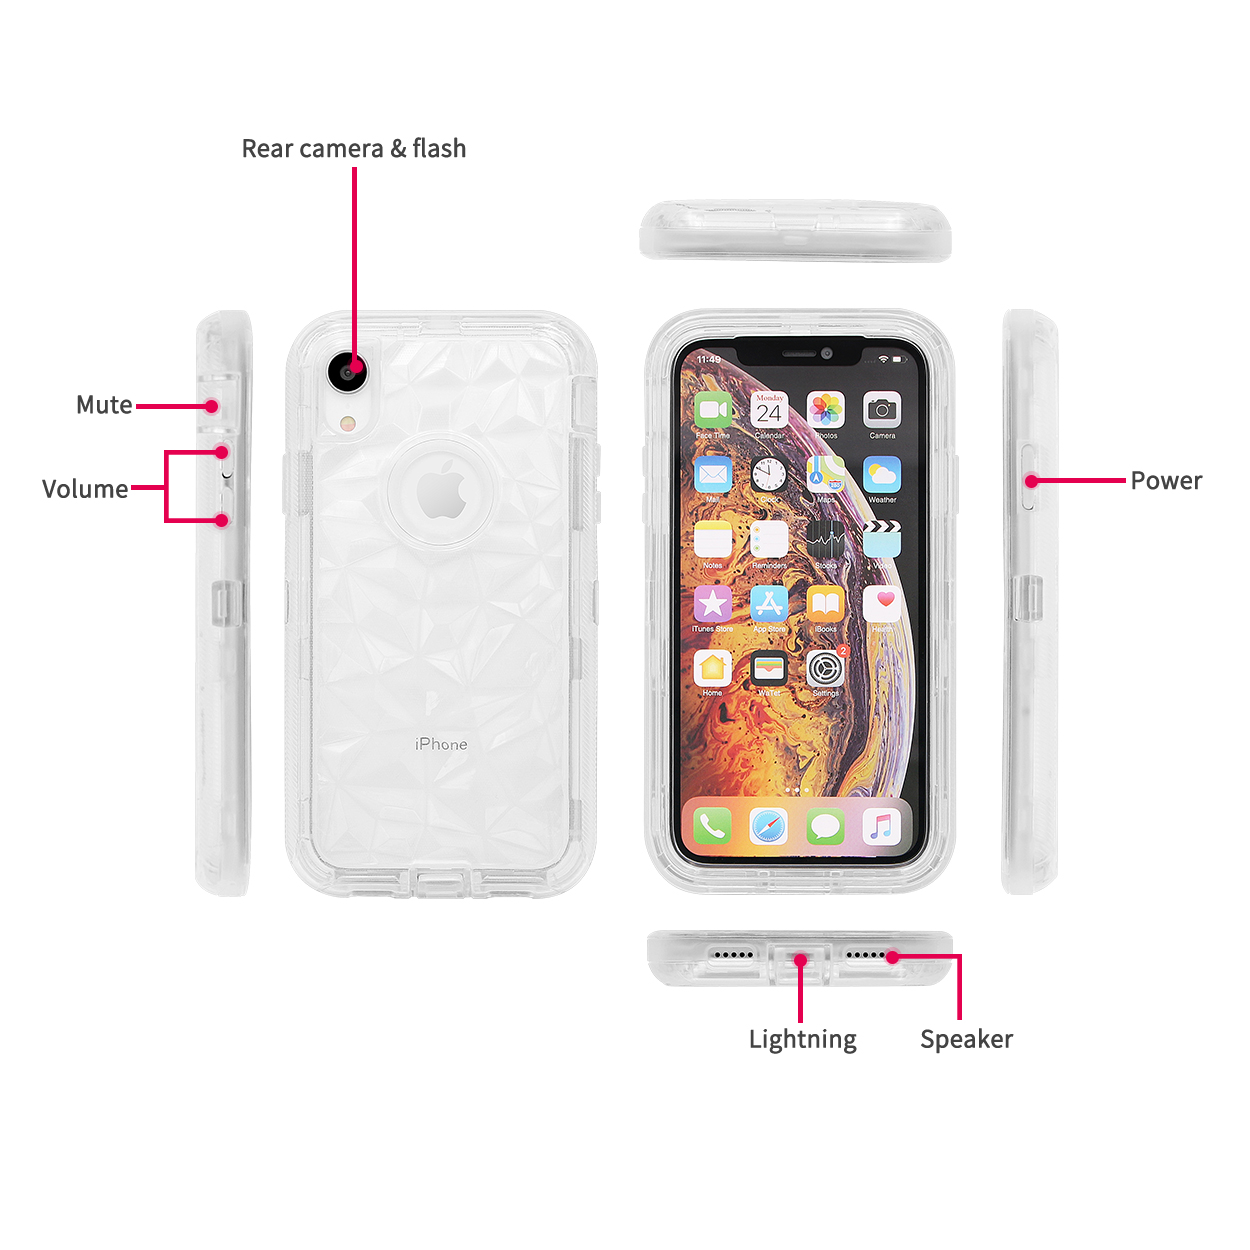 detachable hybrid phone case